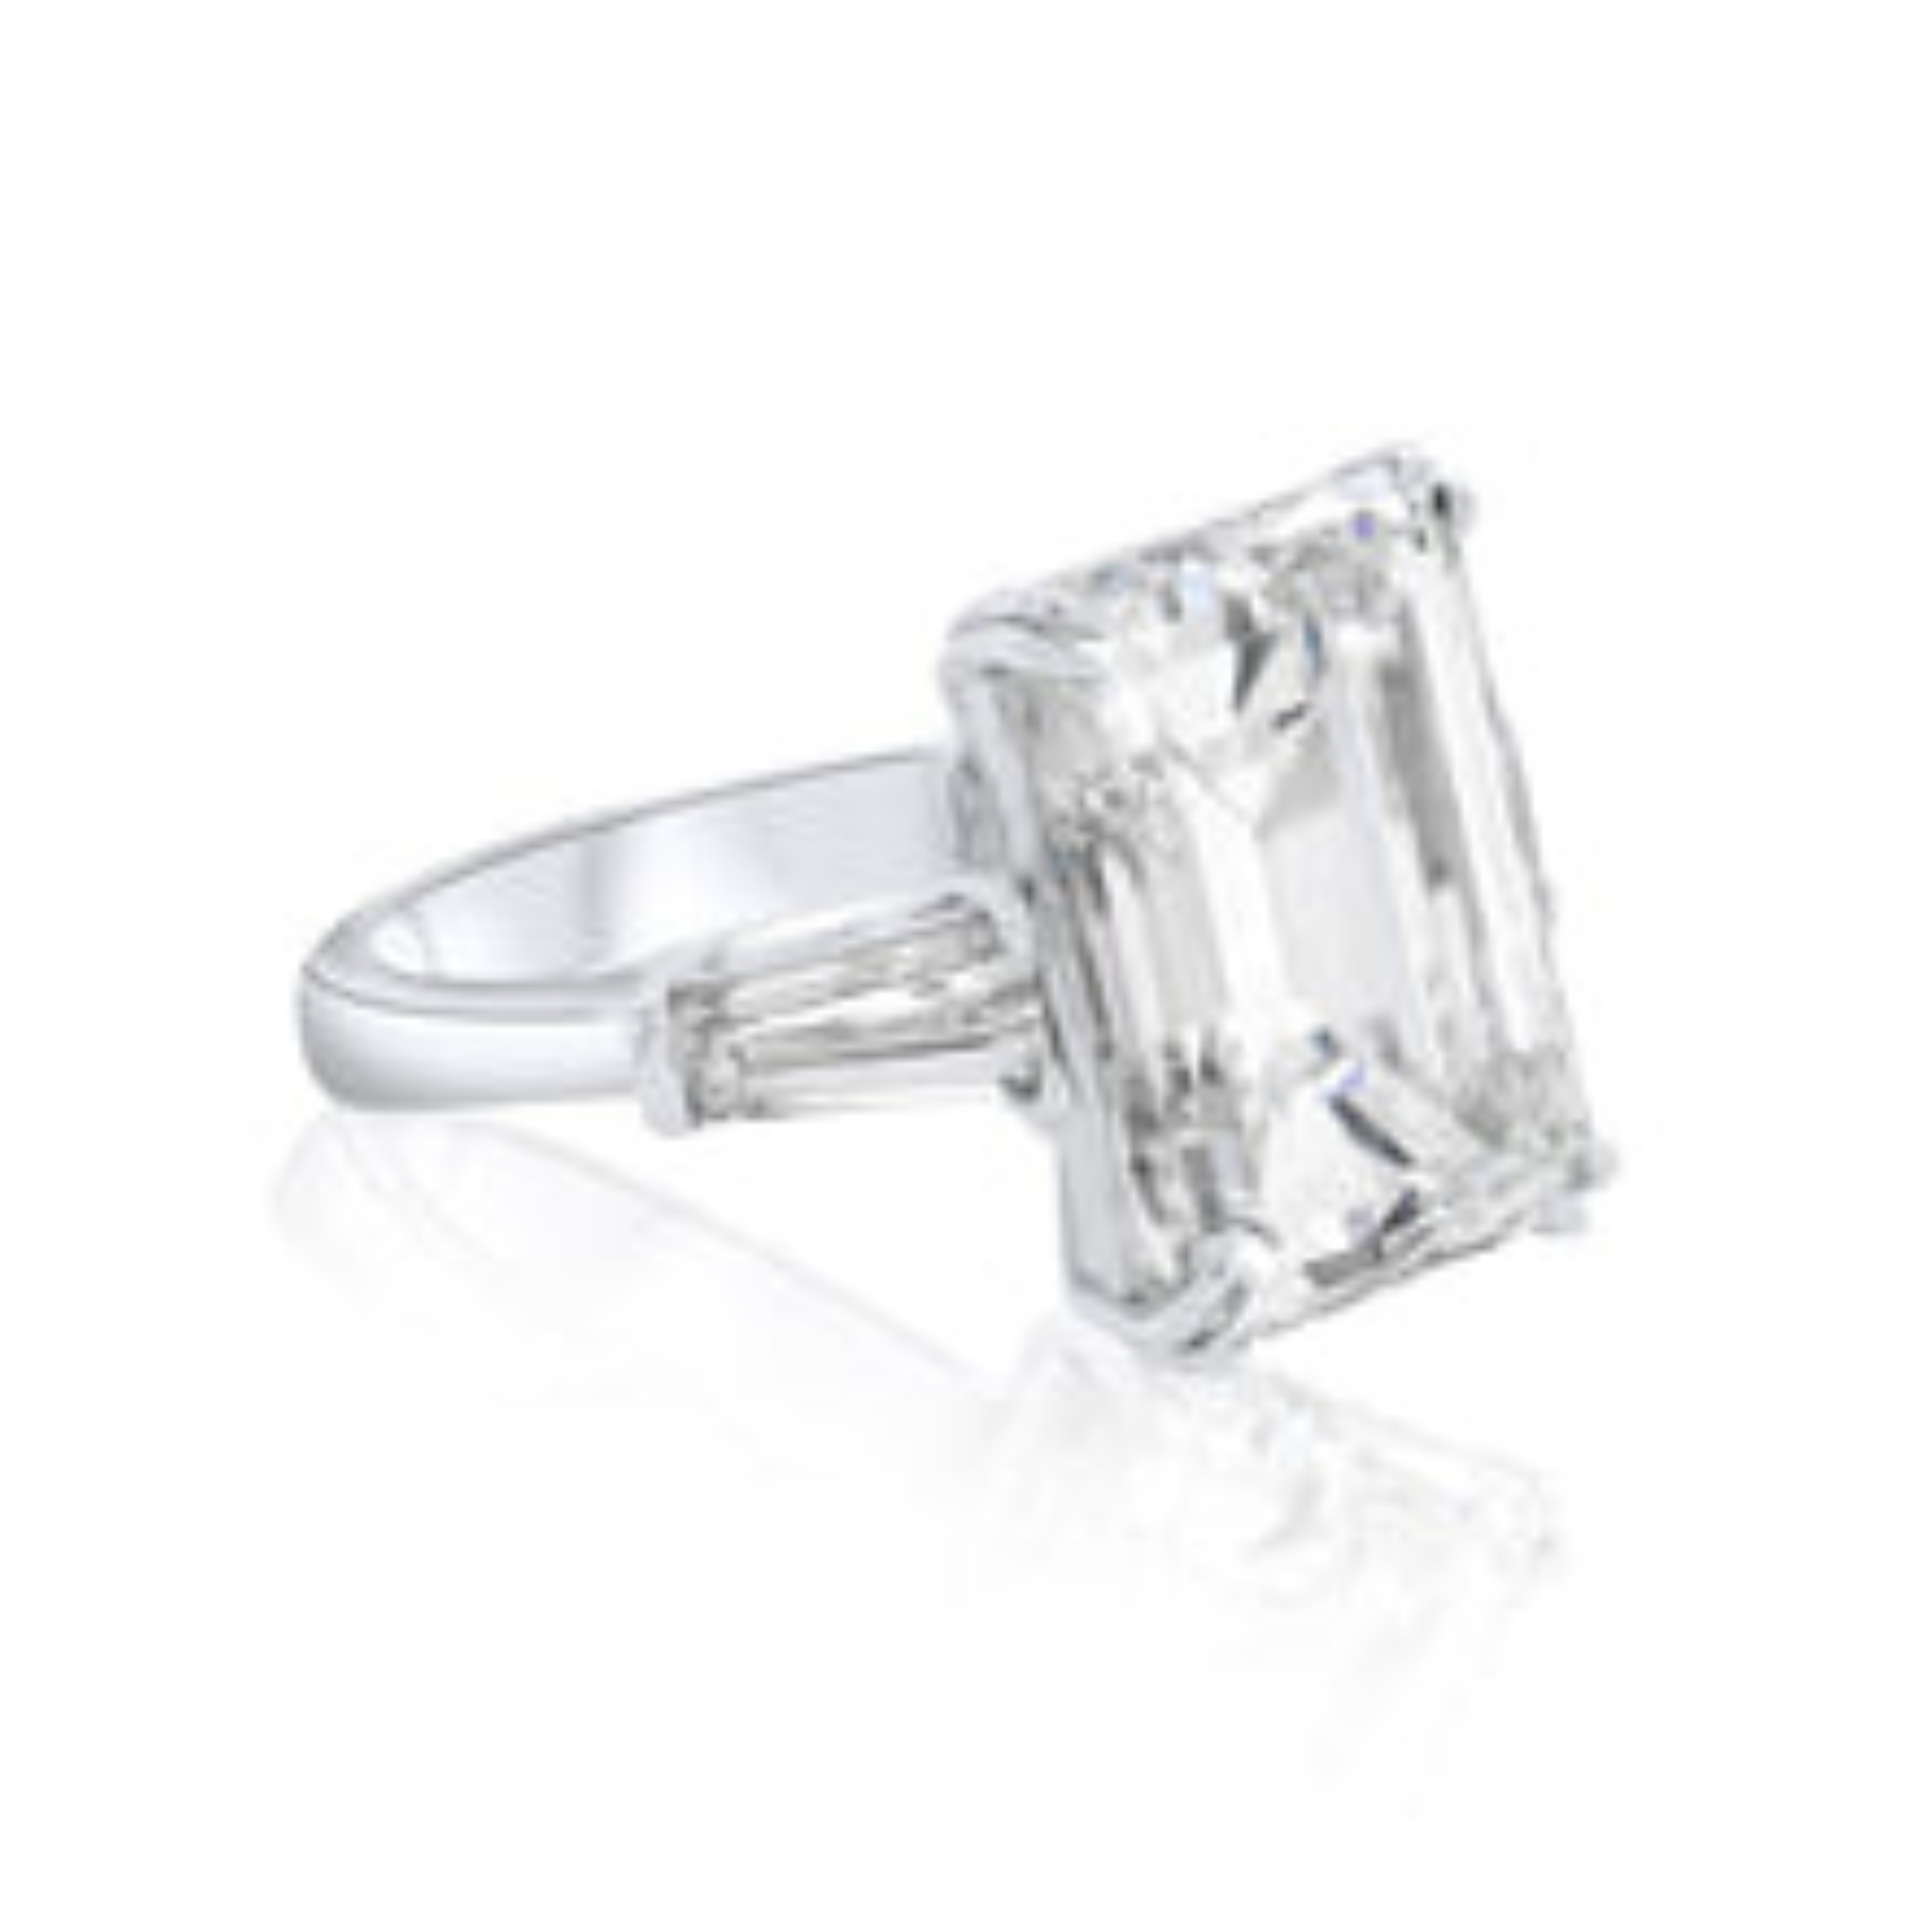 11.34ct Emerald Cut Diamond Ring.jpg